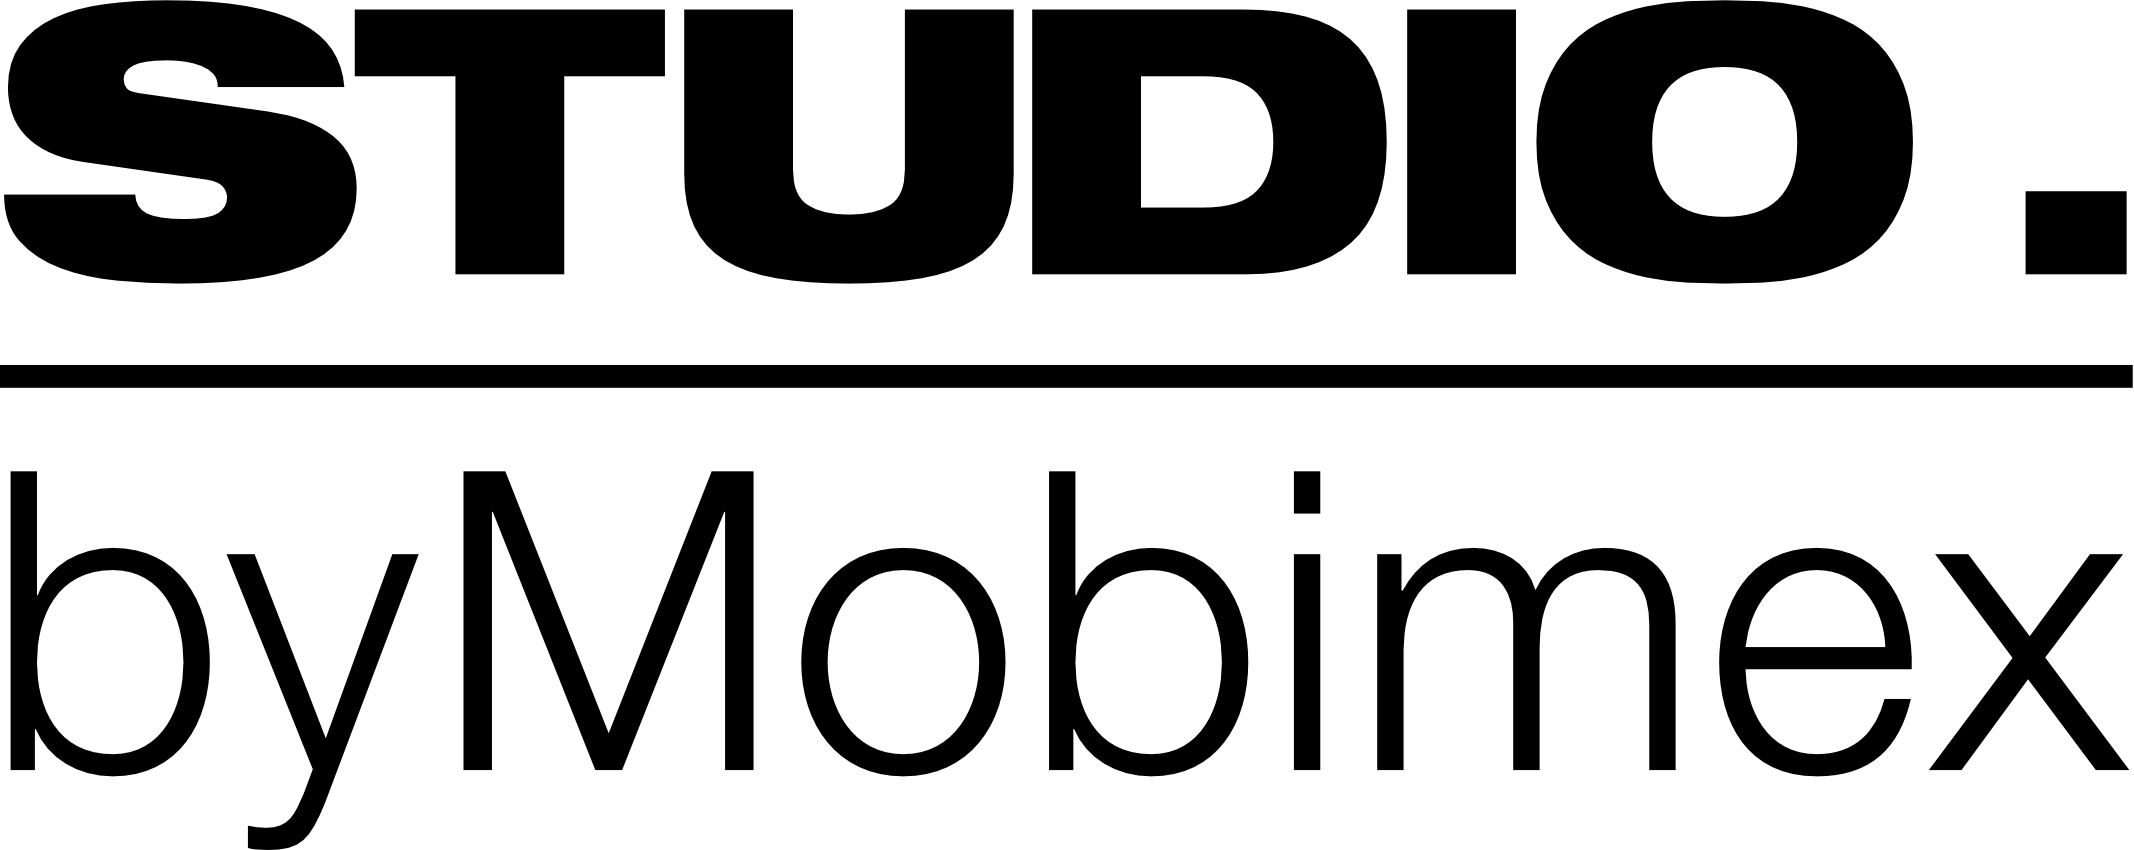 Logo Studio by Mobimex